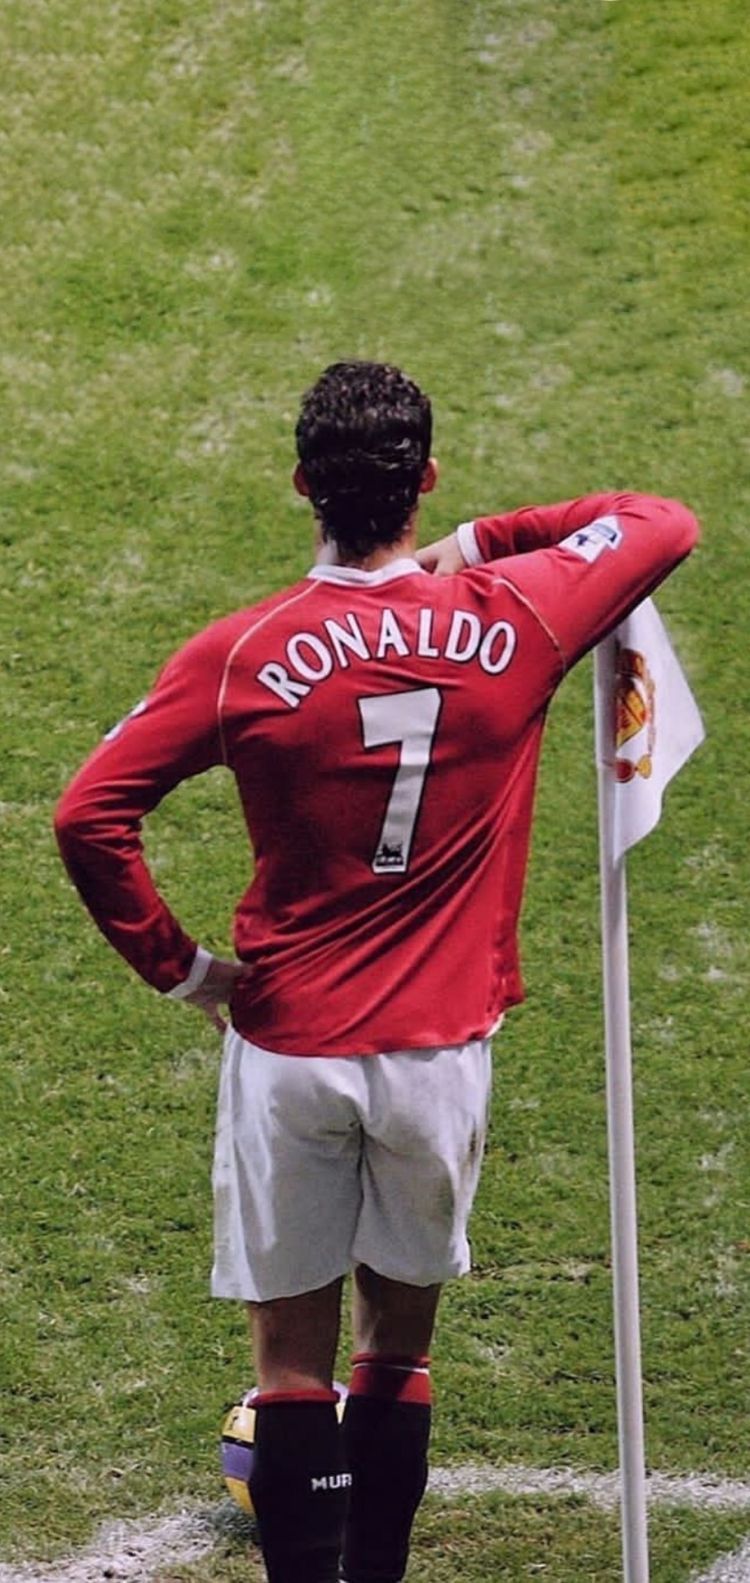 Ronaldo 7. Ronaldo, Cristiano ronaldo, Manchester united